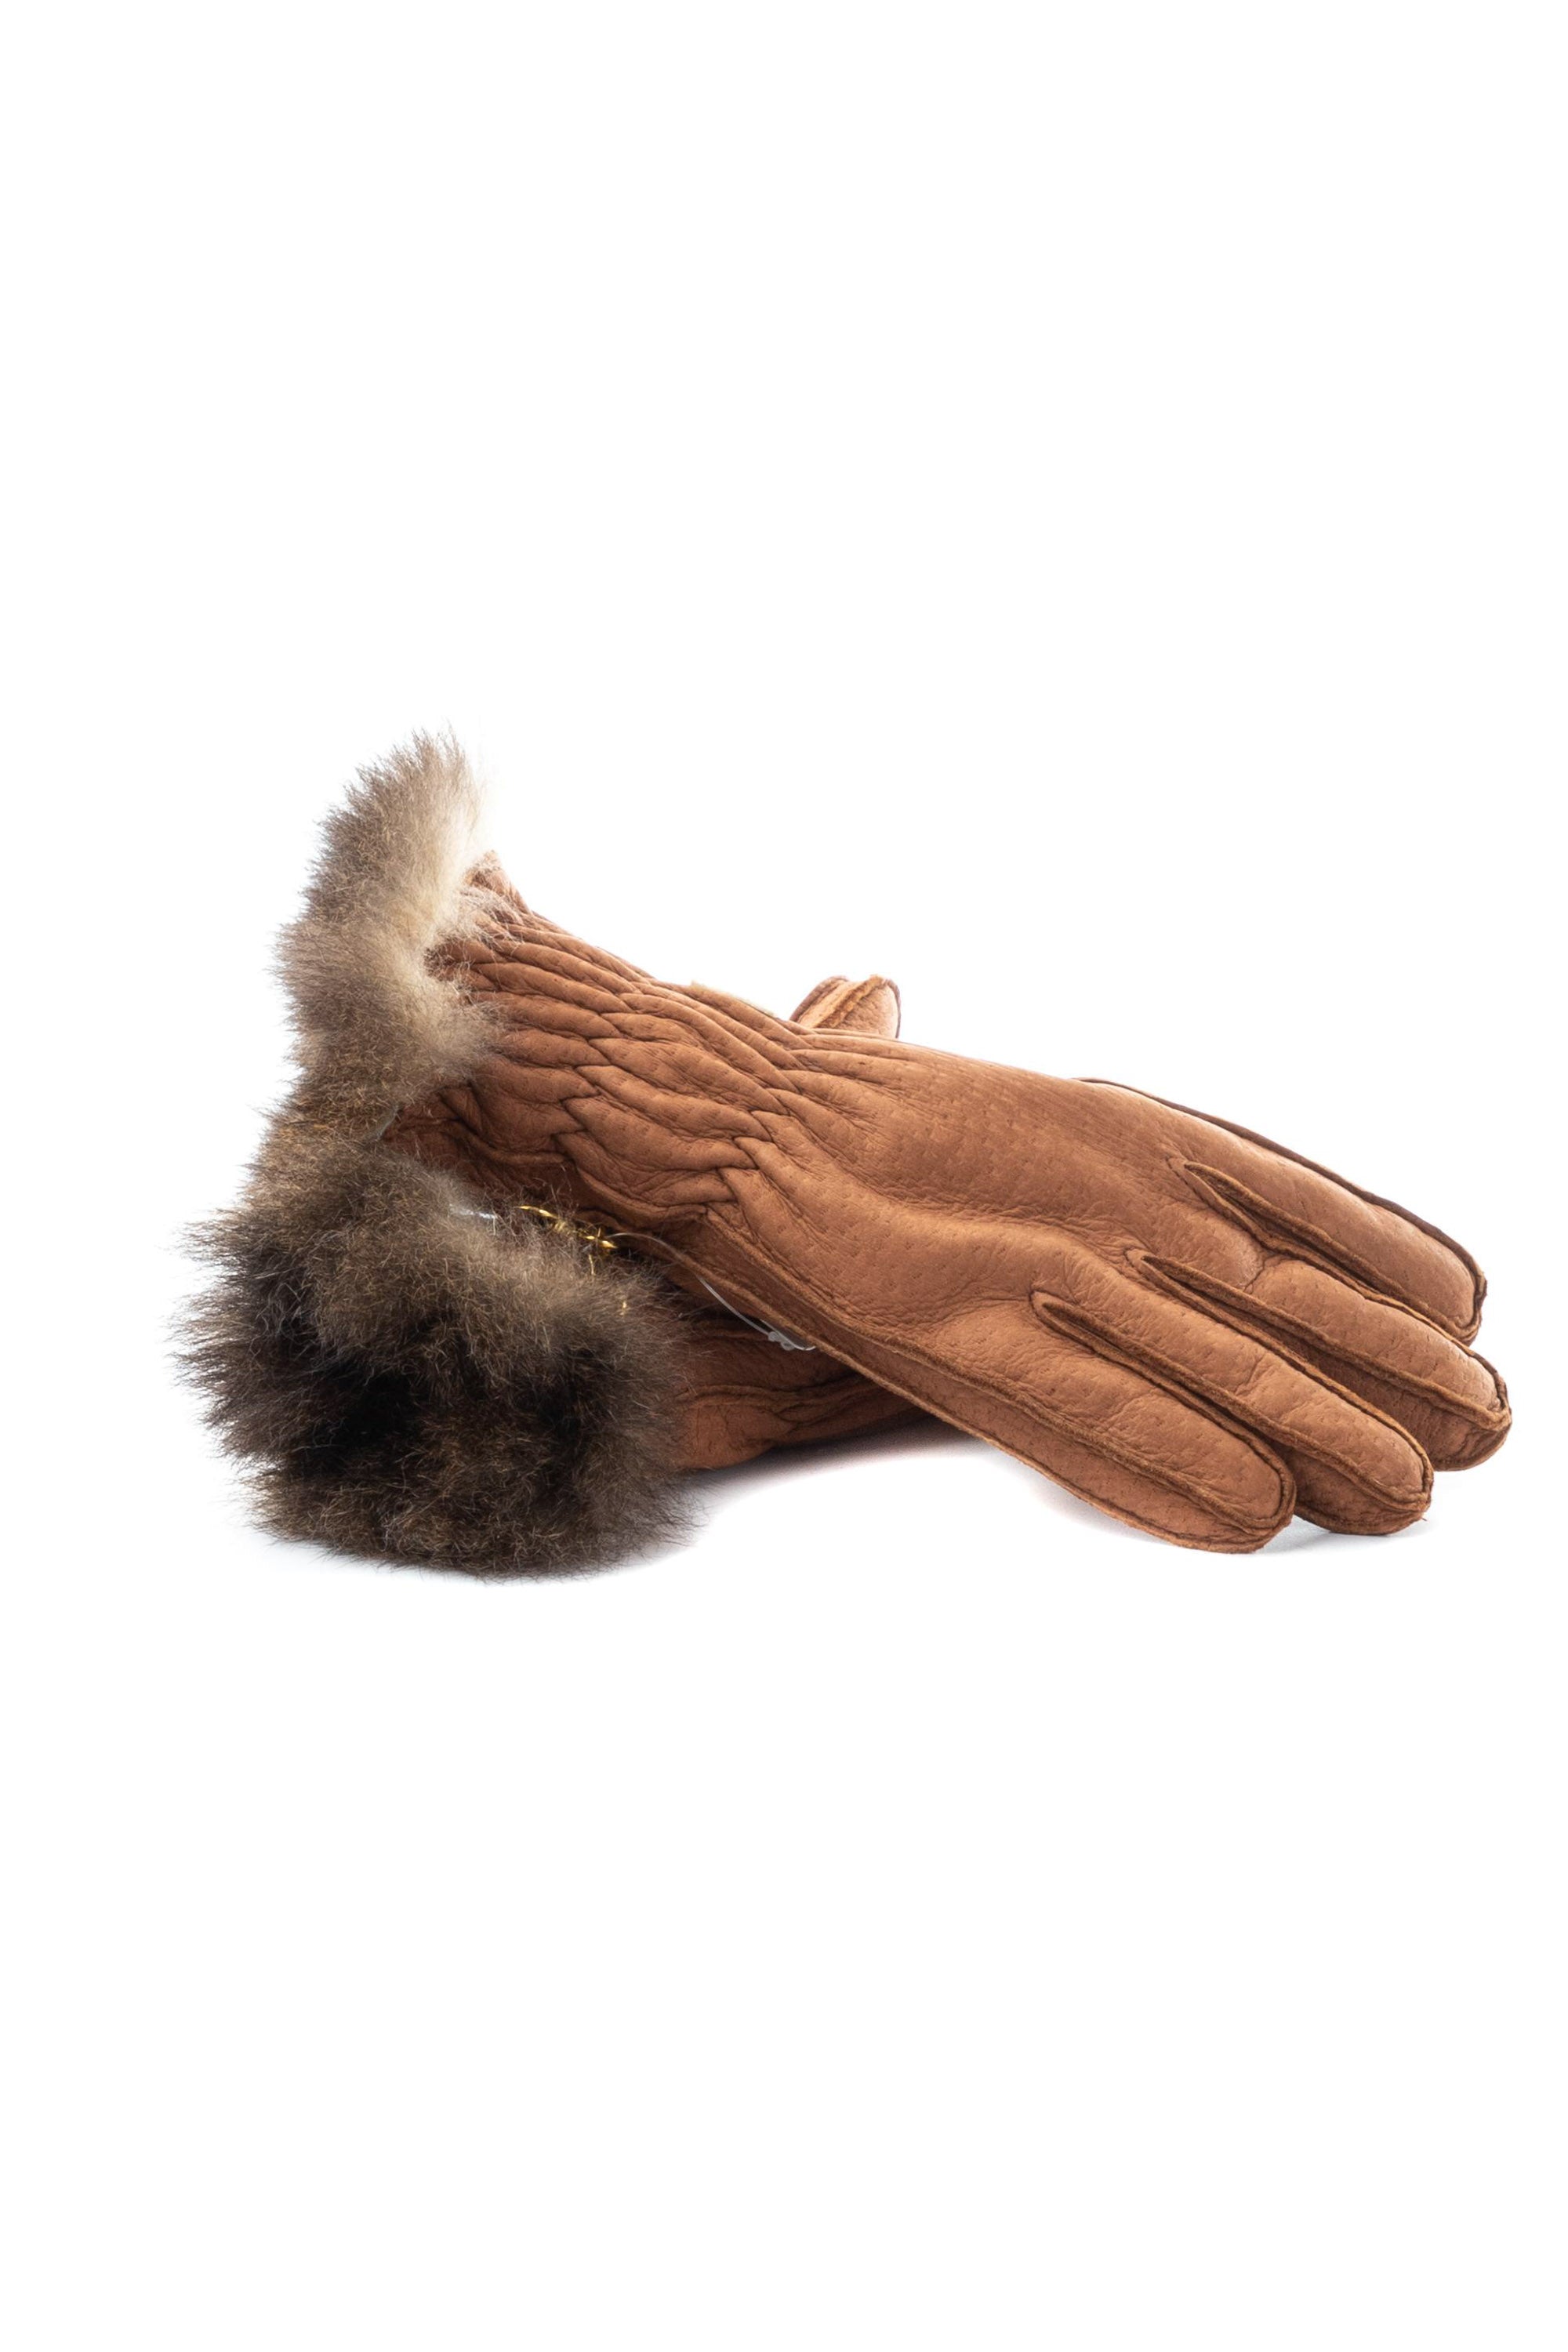 Peccary glove with possum interior